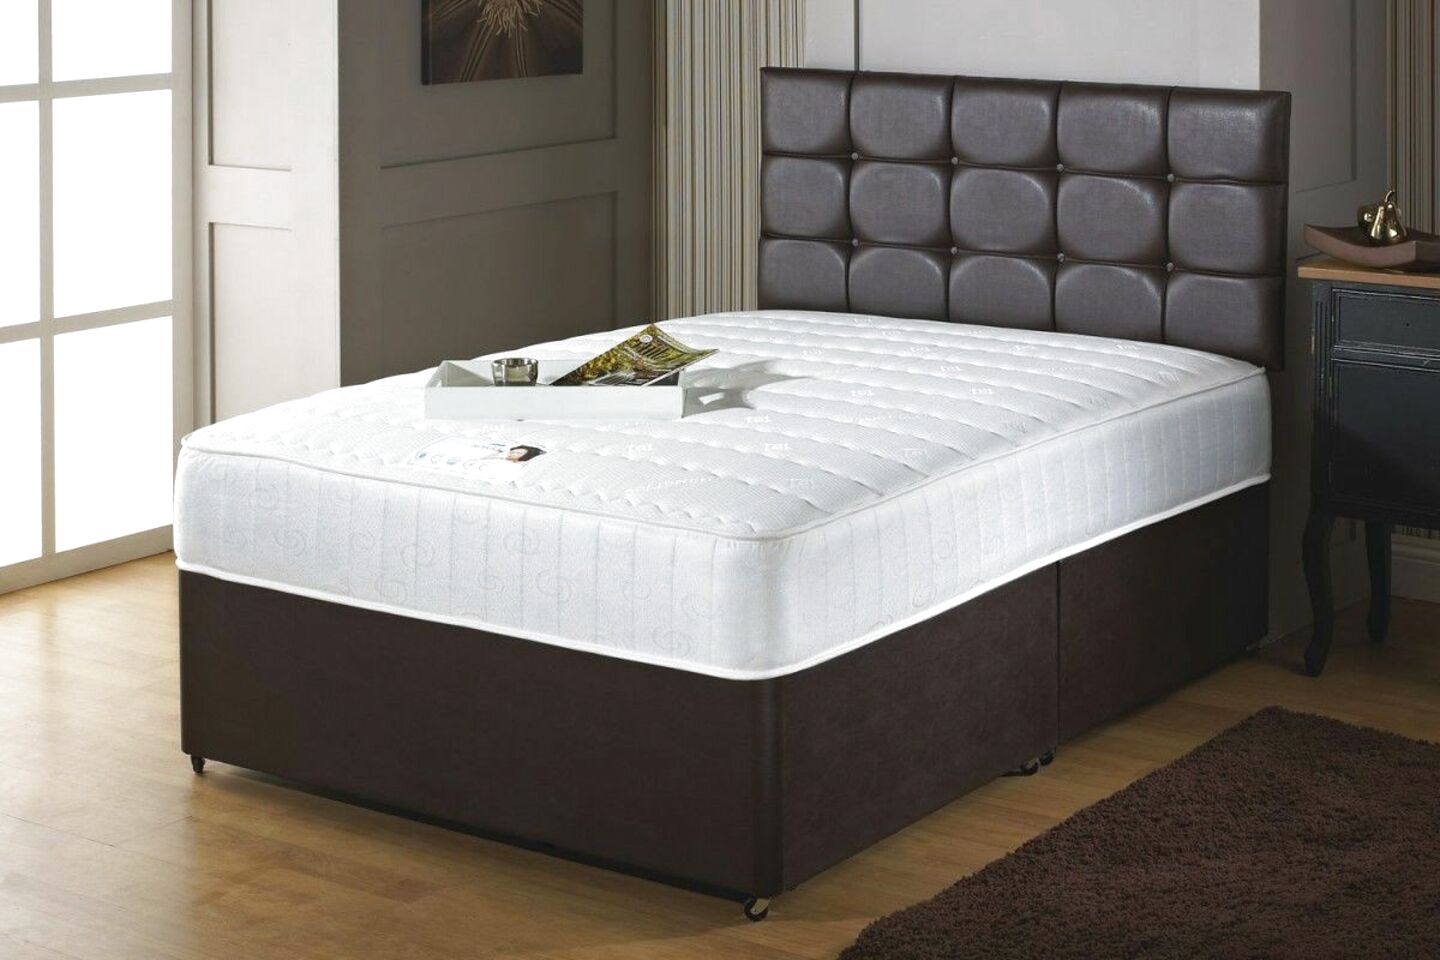 4ft bed and mattress set